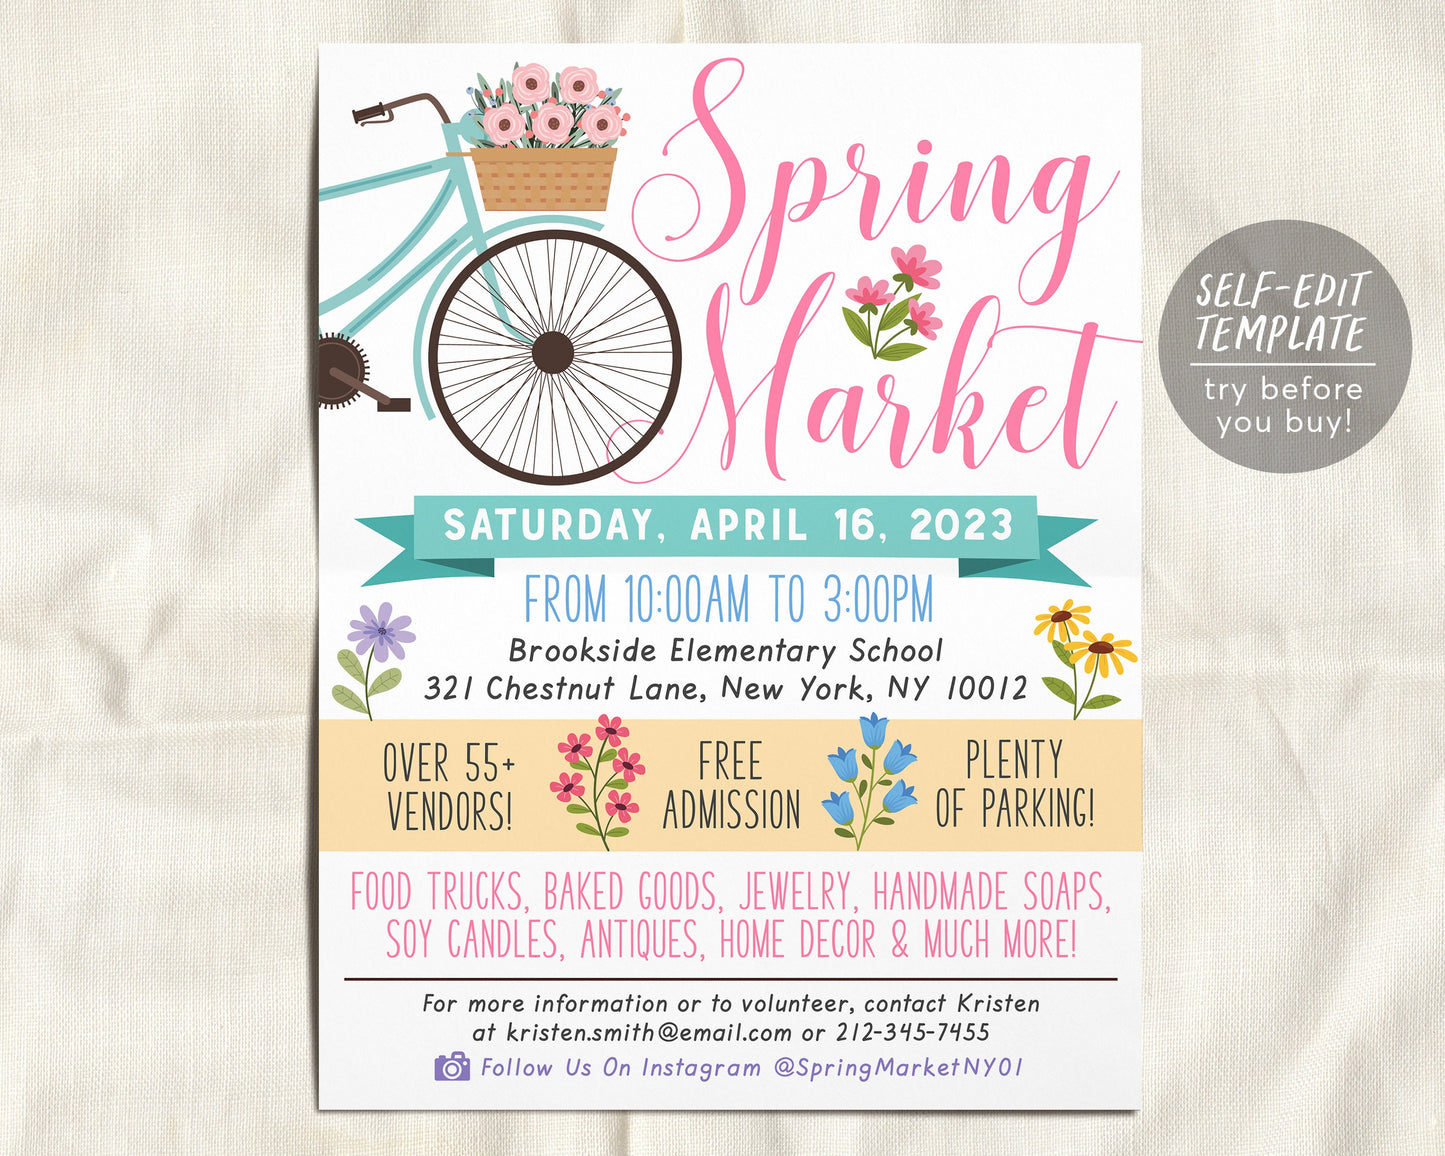 Spring Market Flyer Editable Template, Easter Spring Festival Vendor Bazaar Crafts Floral Bicycle Bike Fundraiser Event, School PTO PTA